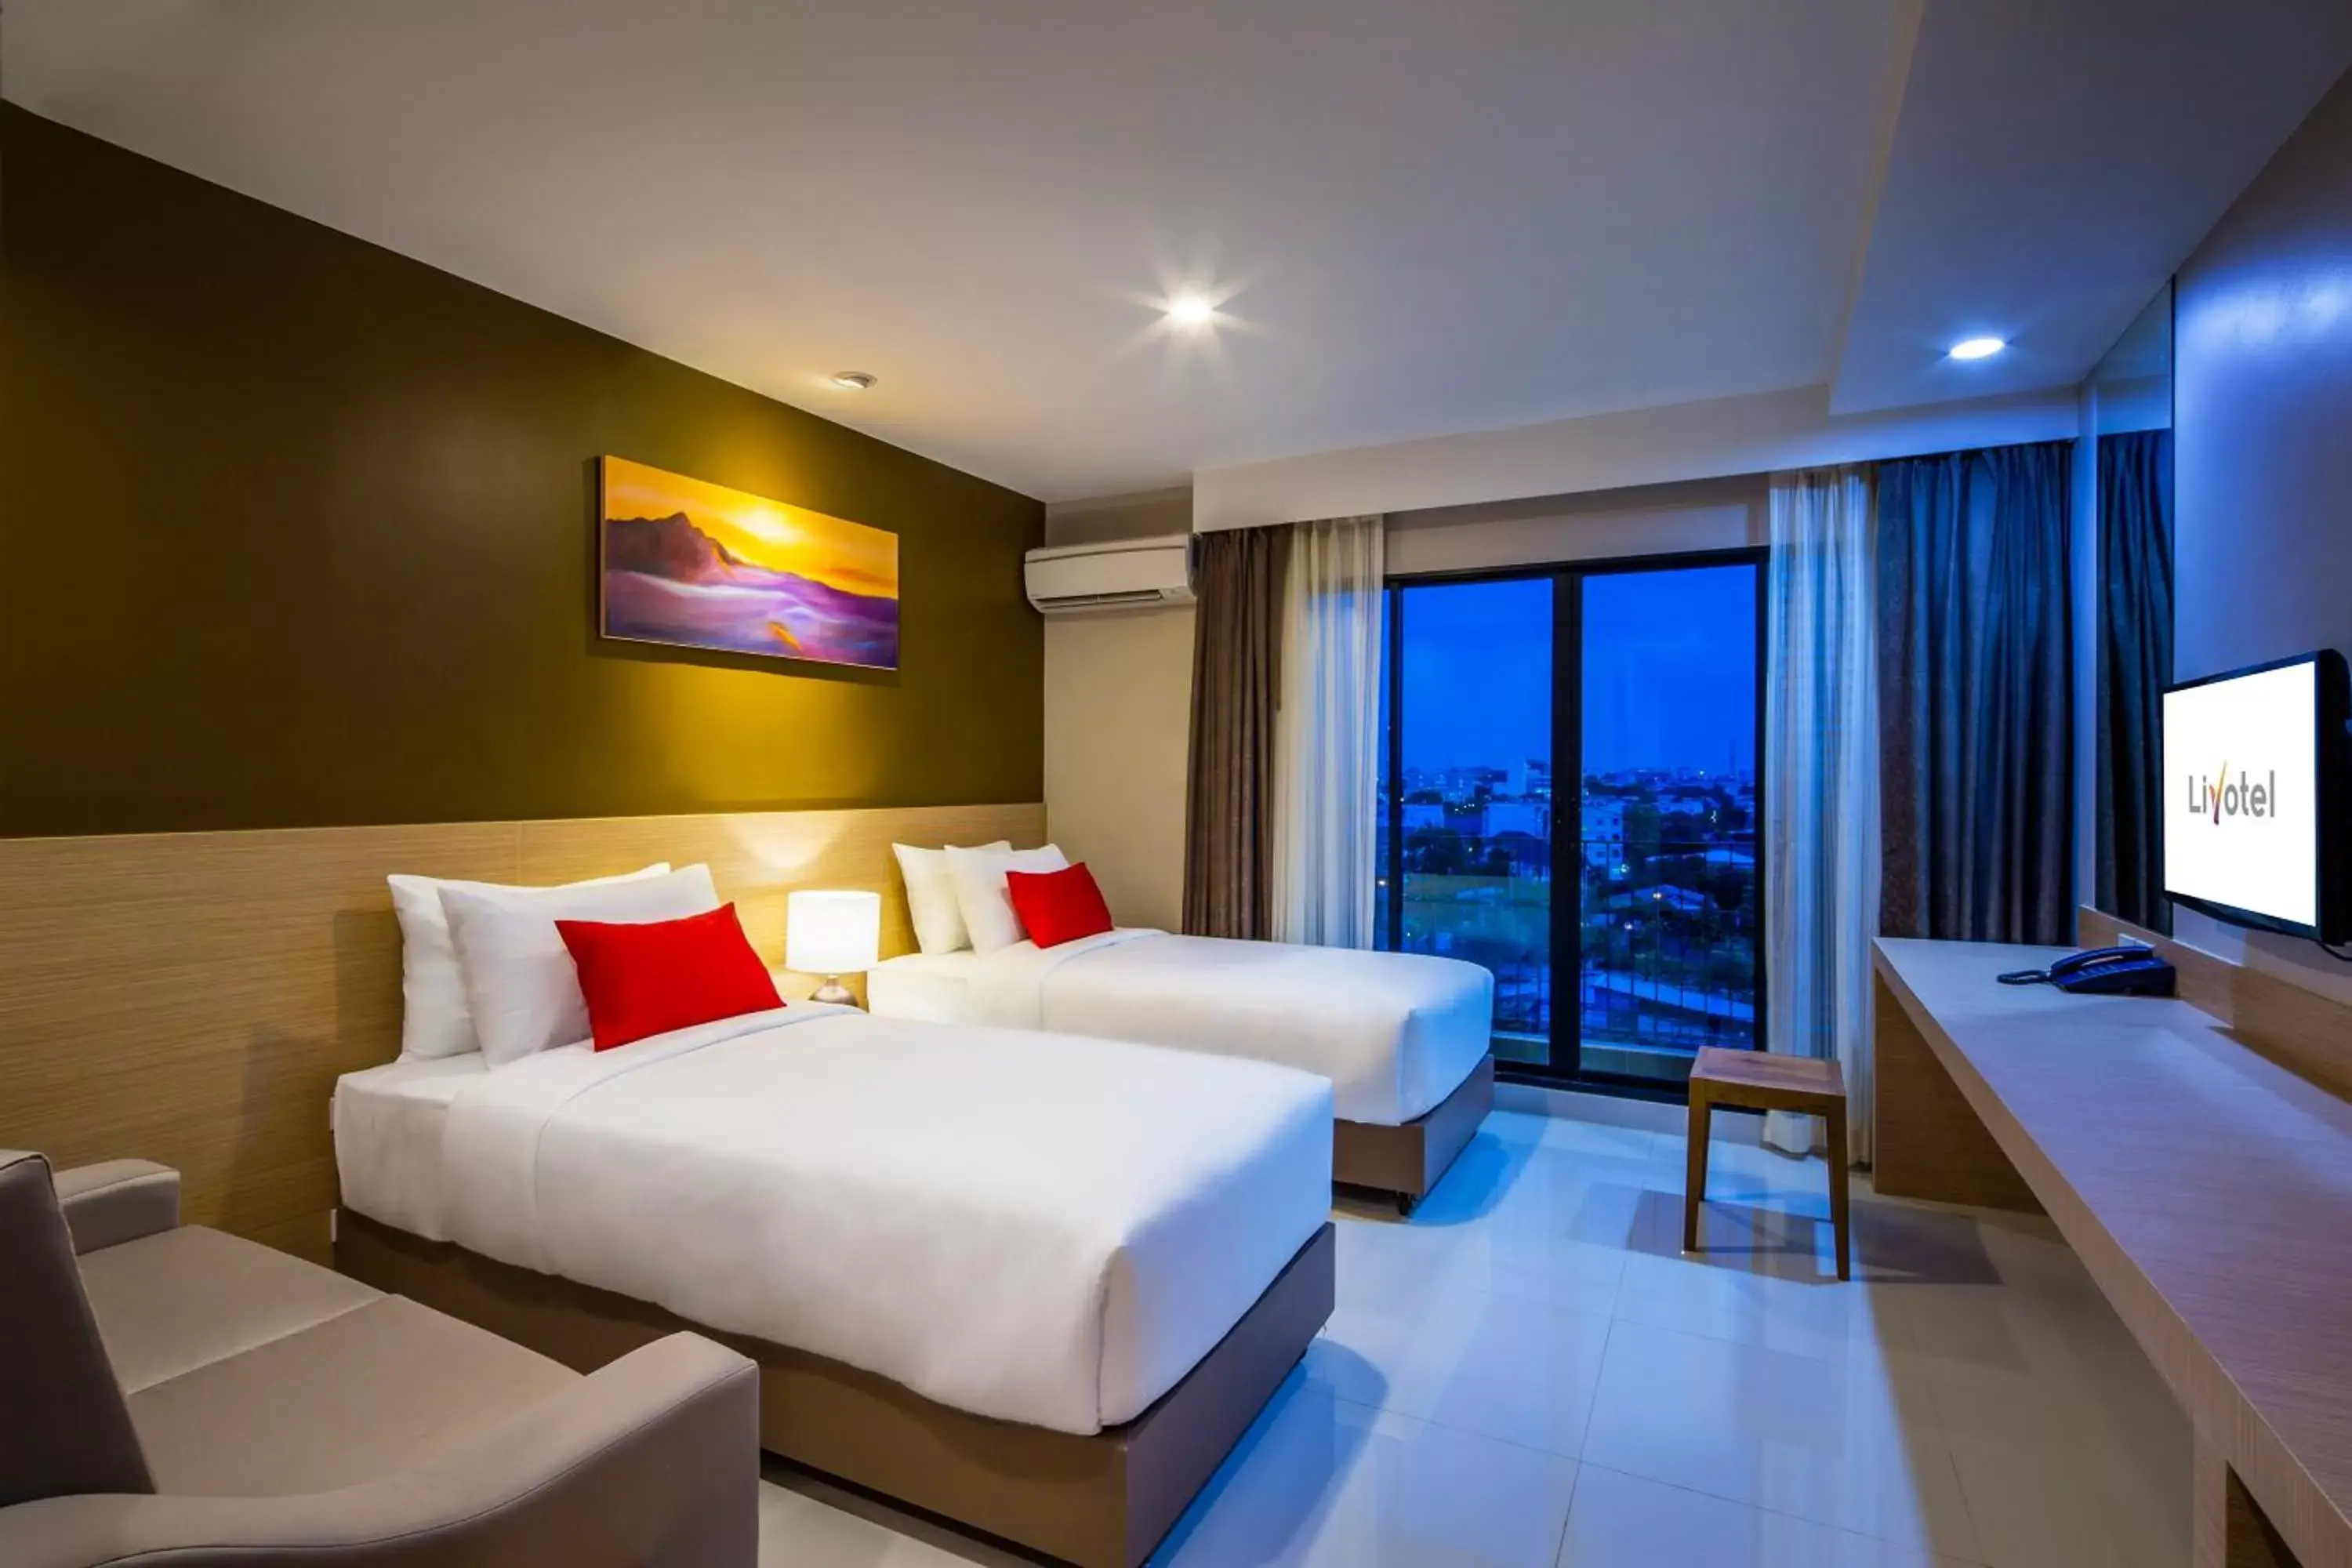 Standard Twin Room in Livotel Hotel Kaset Nawamin Bangkok